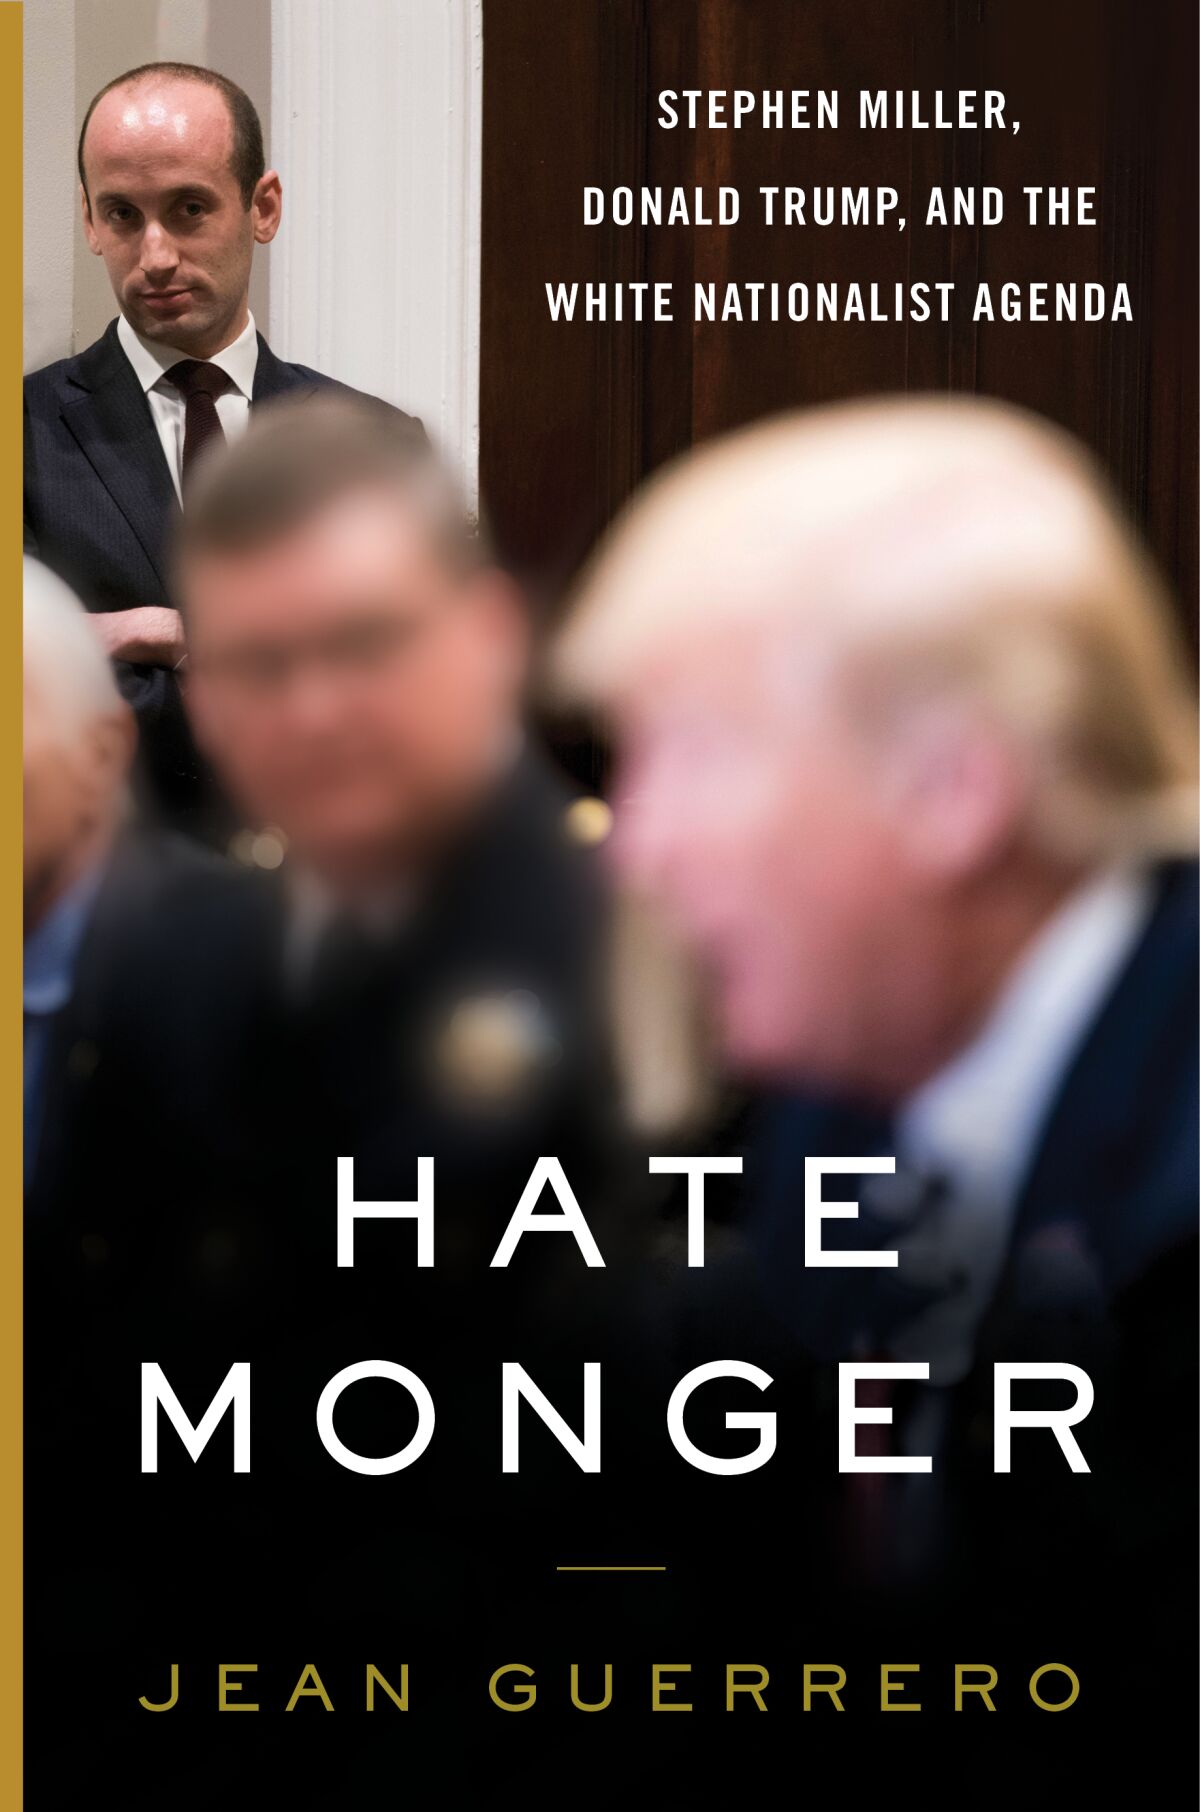 "Hatemonger" book jacket